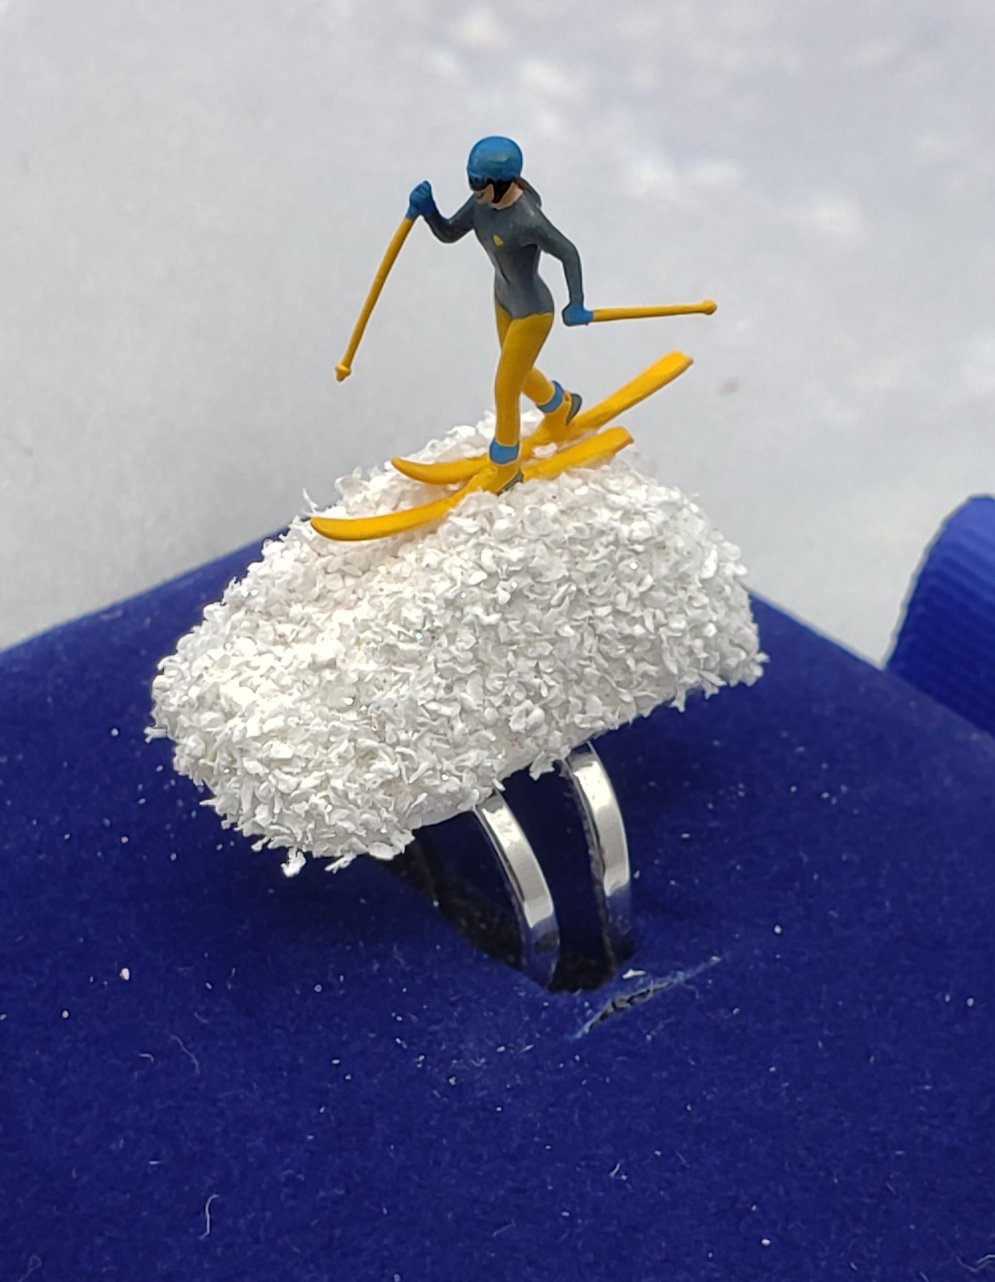 Snow skier ring